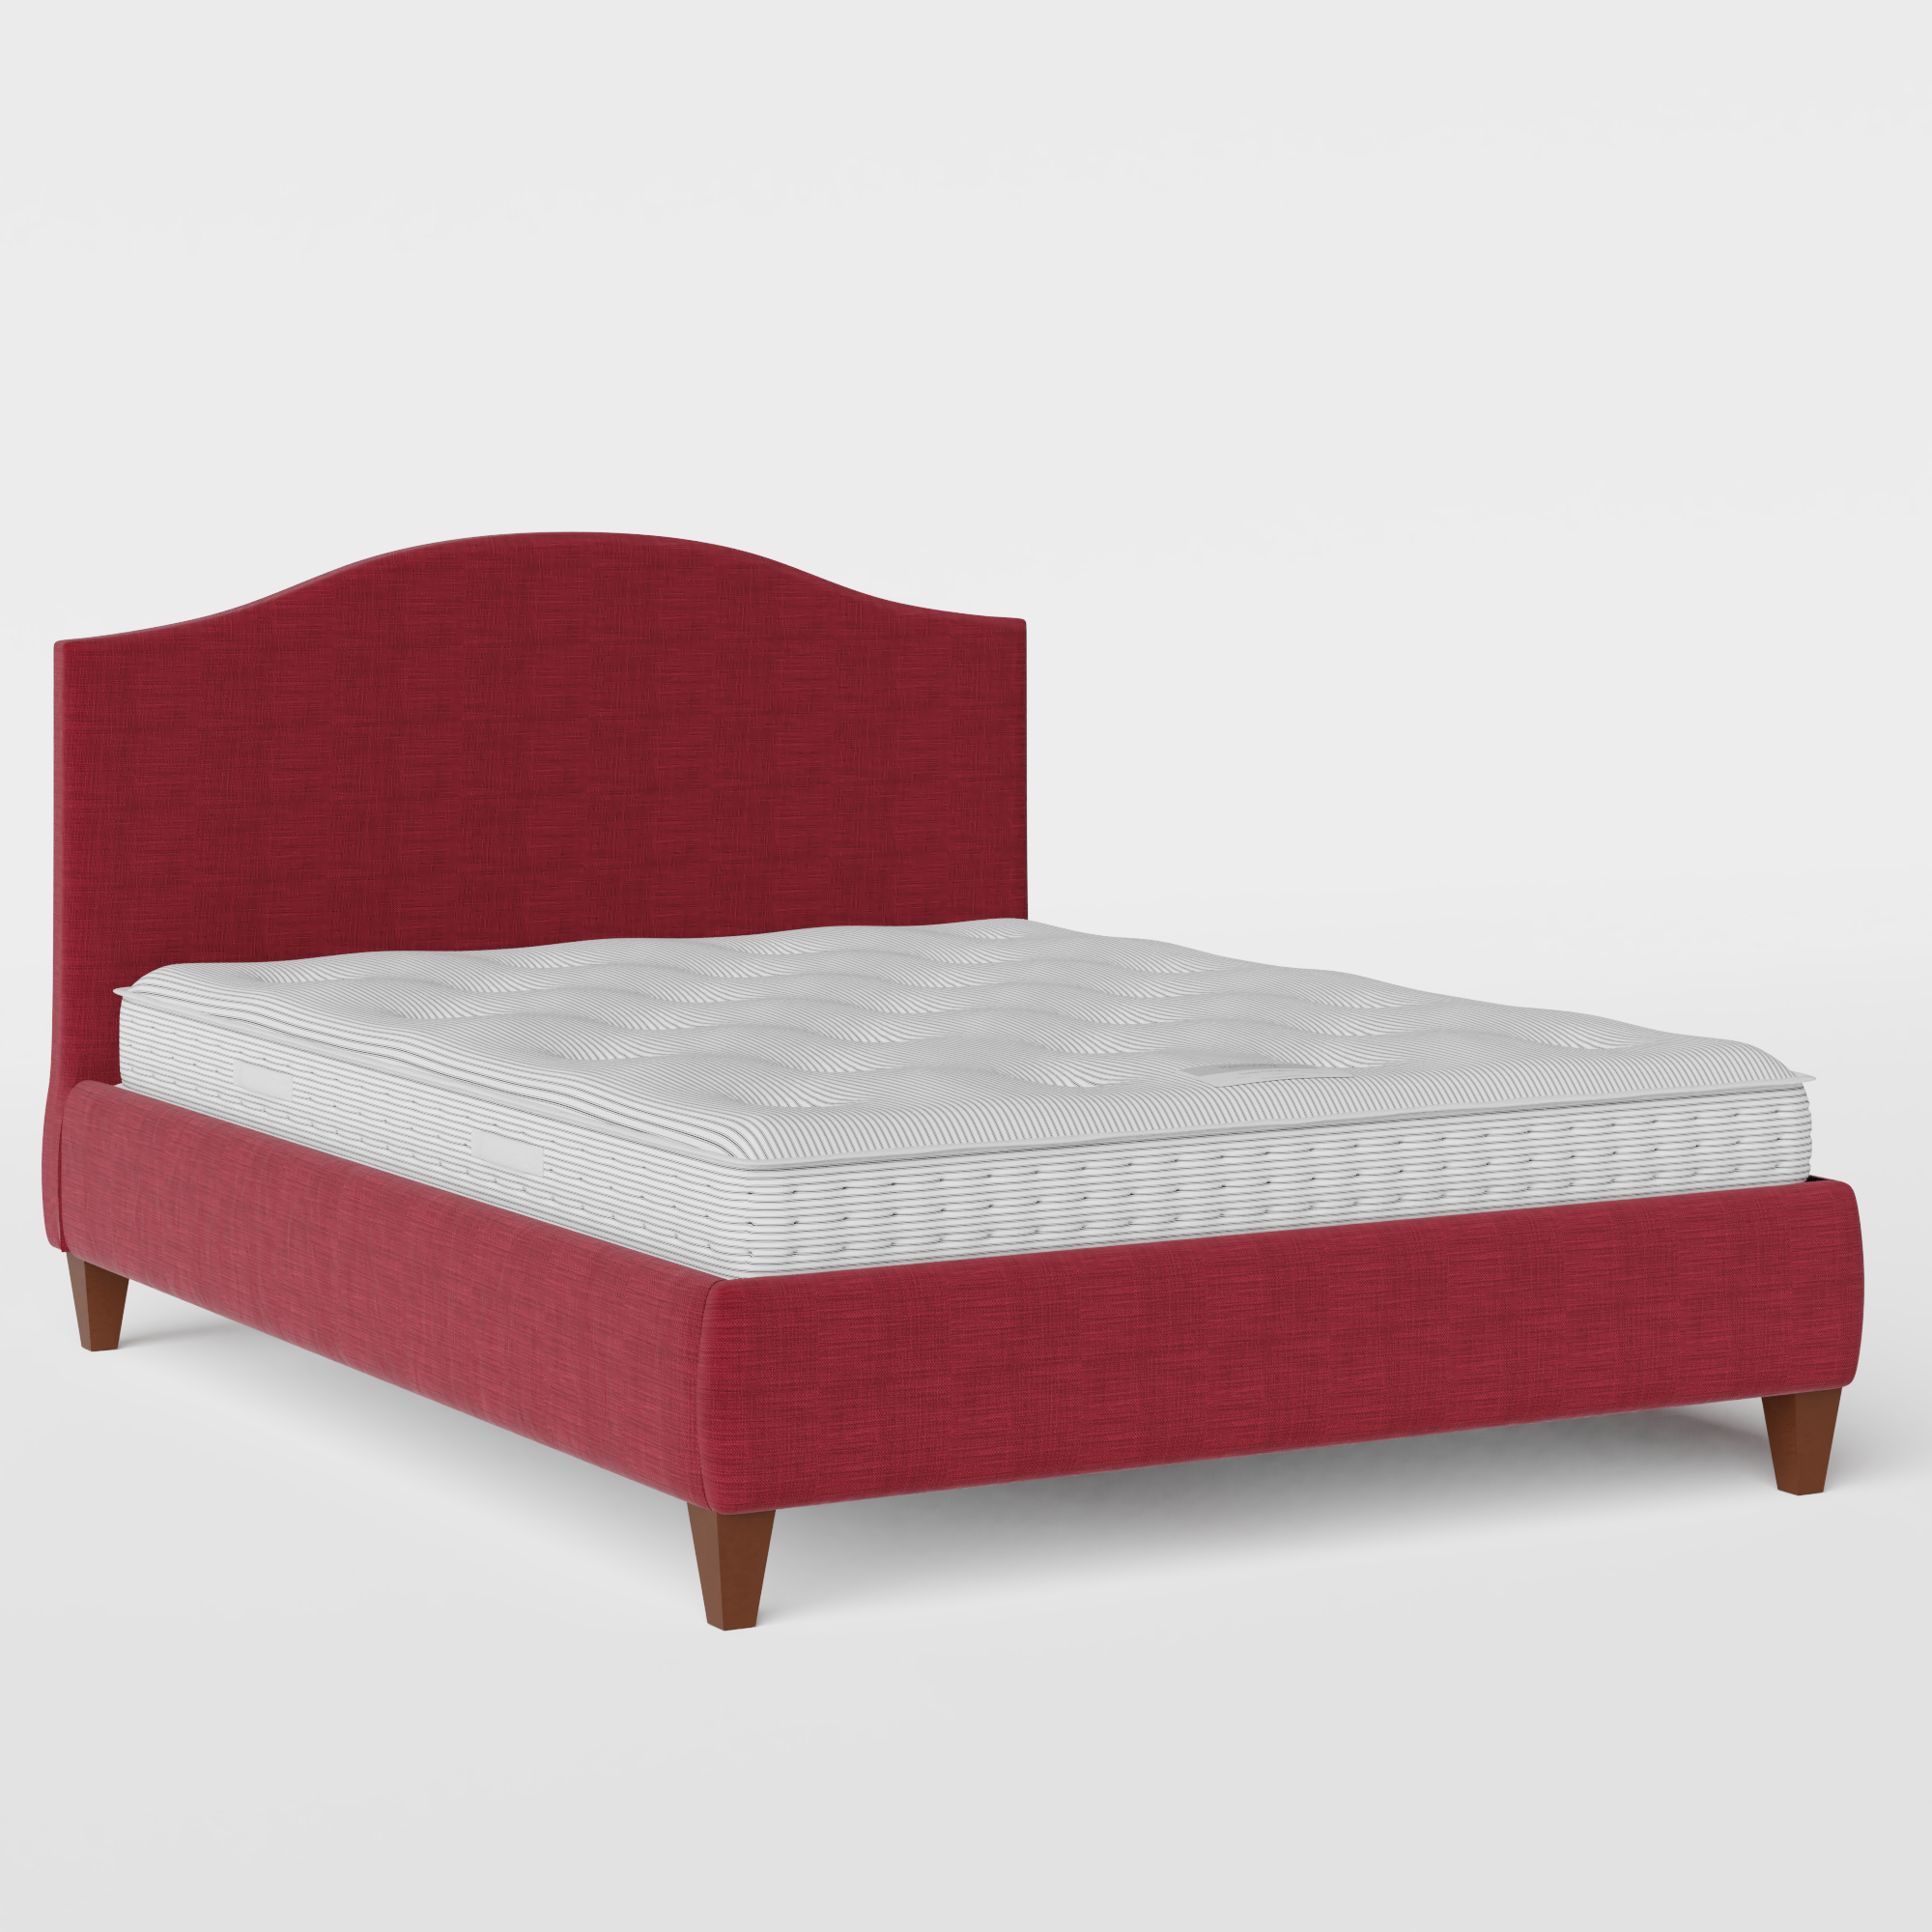 Daniella cama tapizada en tela cherry